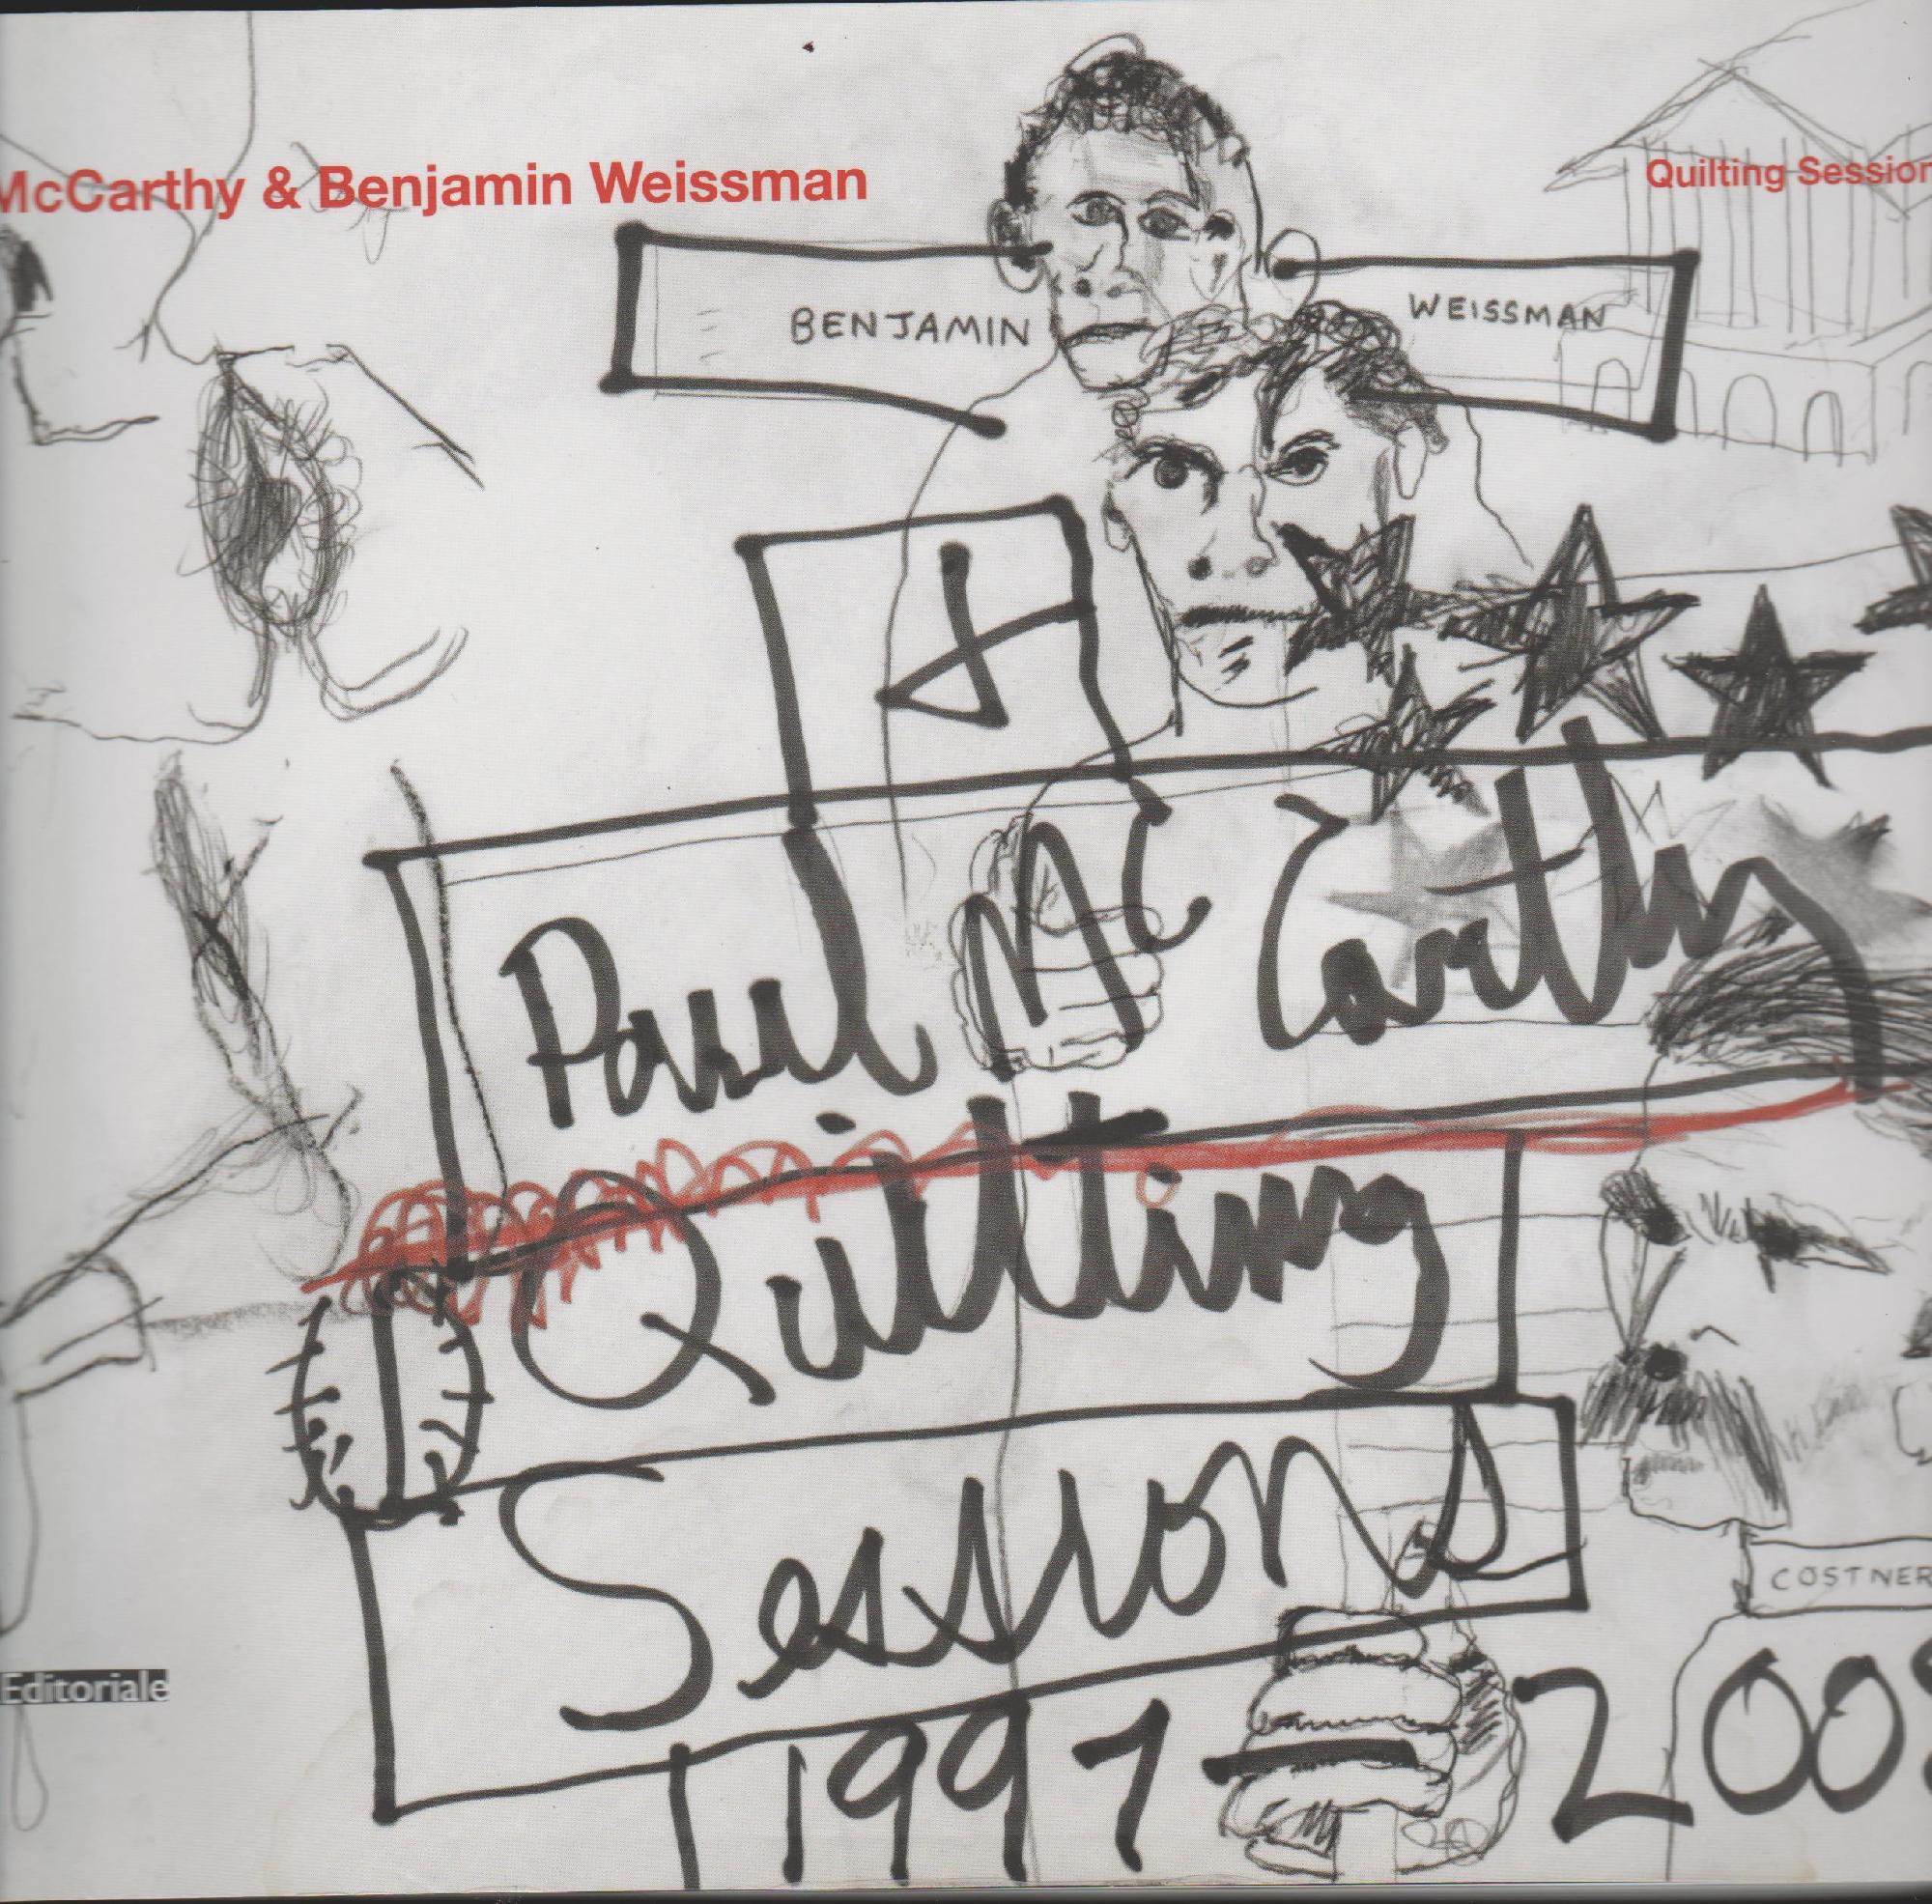 Quilting Sessions 1997-2008 - Paul McCarthy & Benjamin Weissman